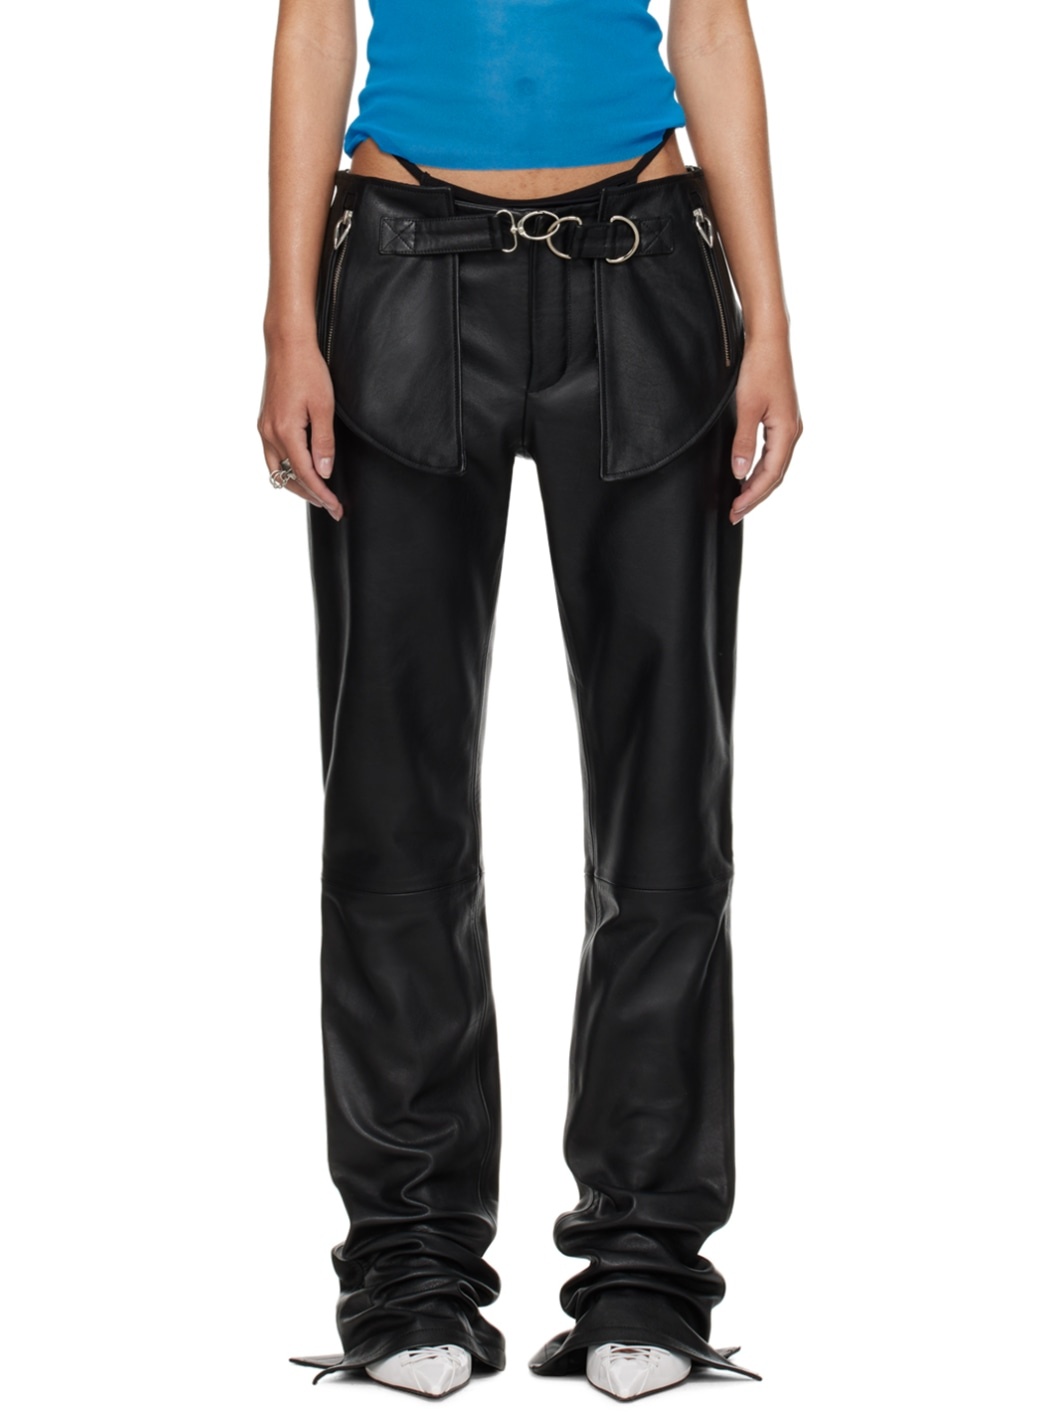 Black Shayne Oliver Edition Leather Pants - 1